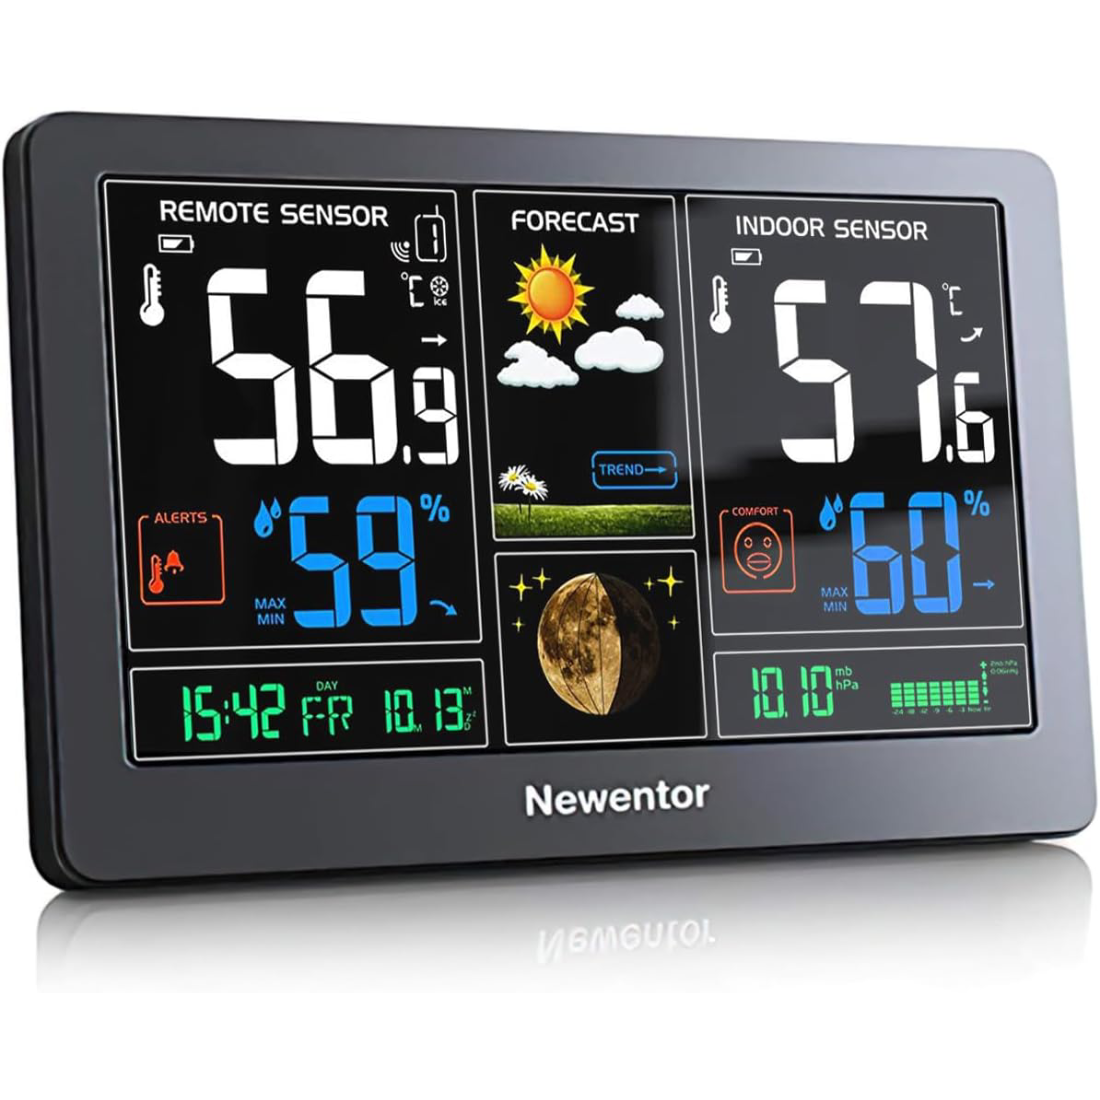 Wireless Indoor/Outdoor Thermometer